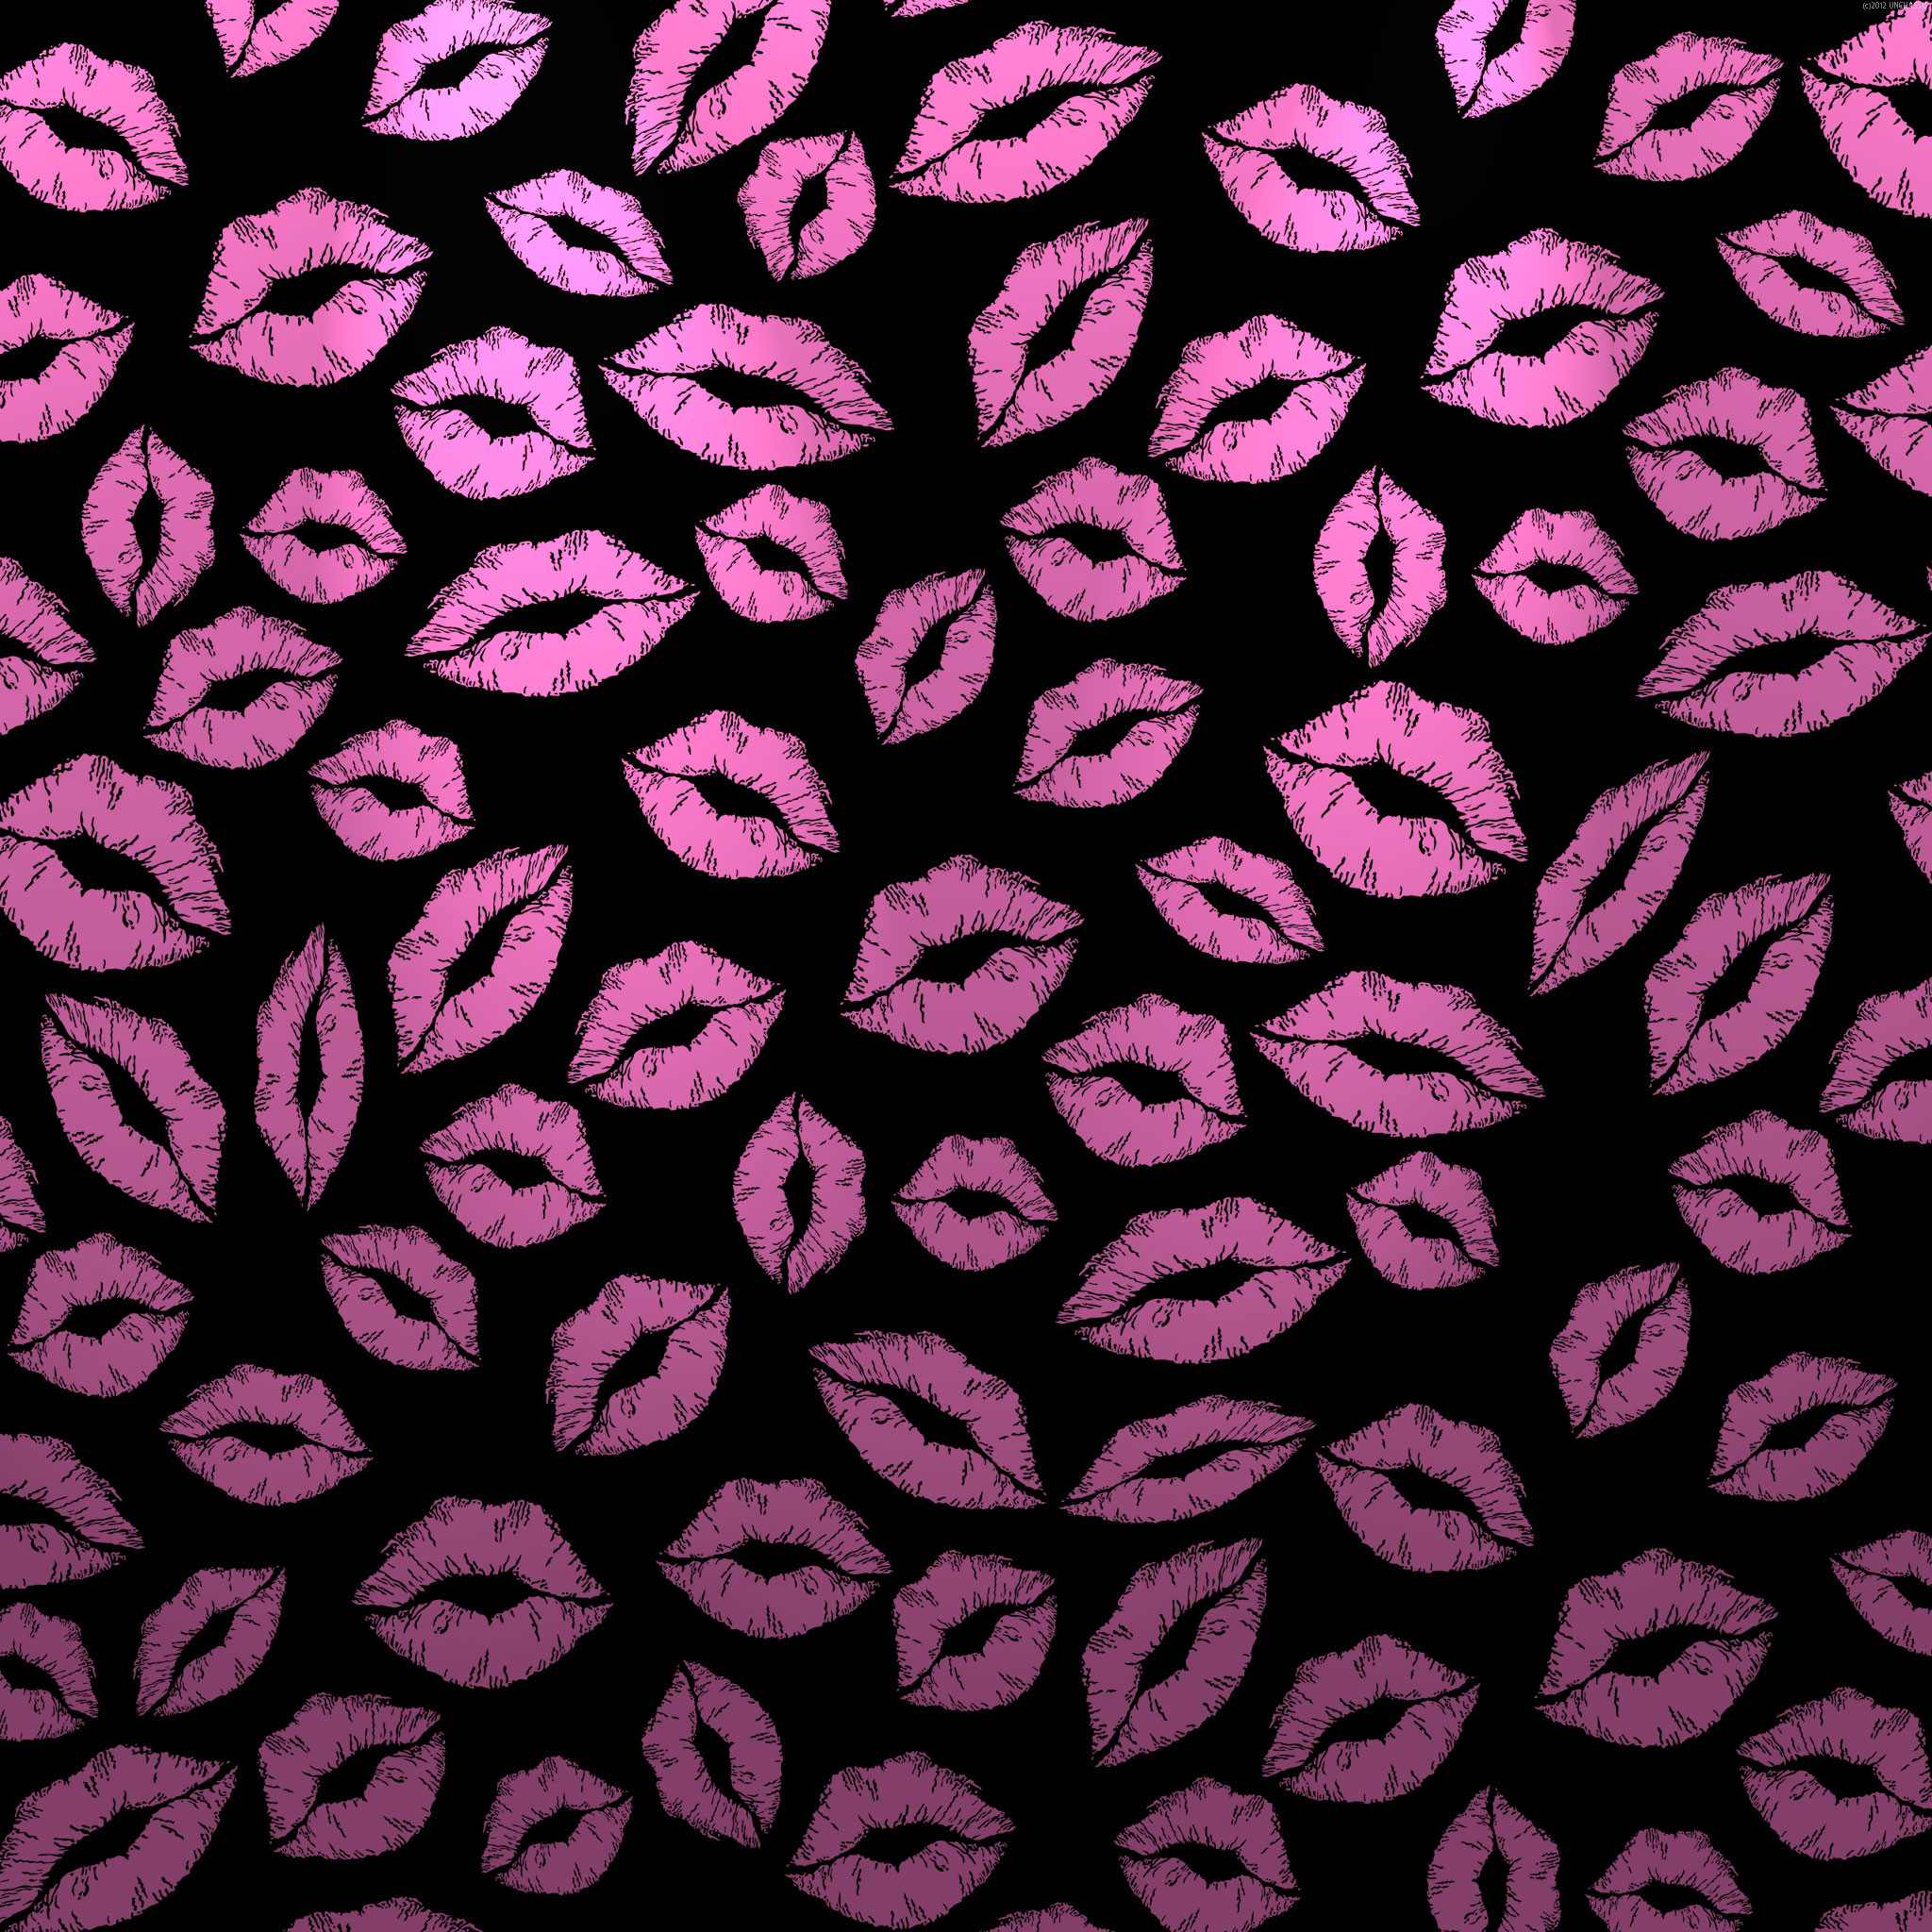 2048x2048 pink and black zebra print wallpaper hd pink and black zebra wallpaper .